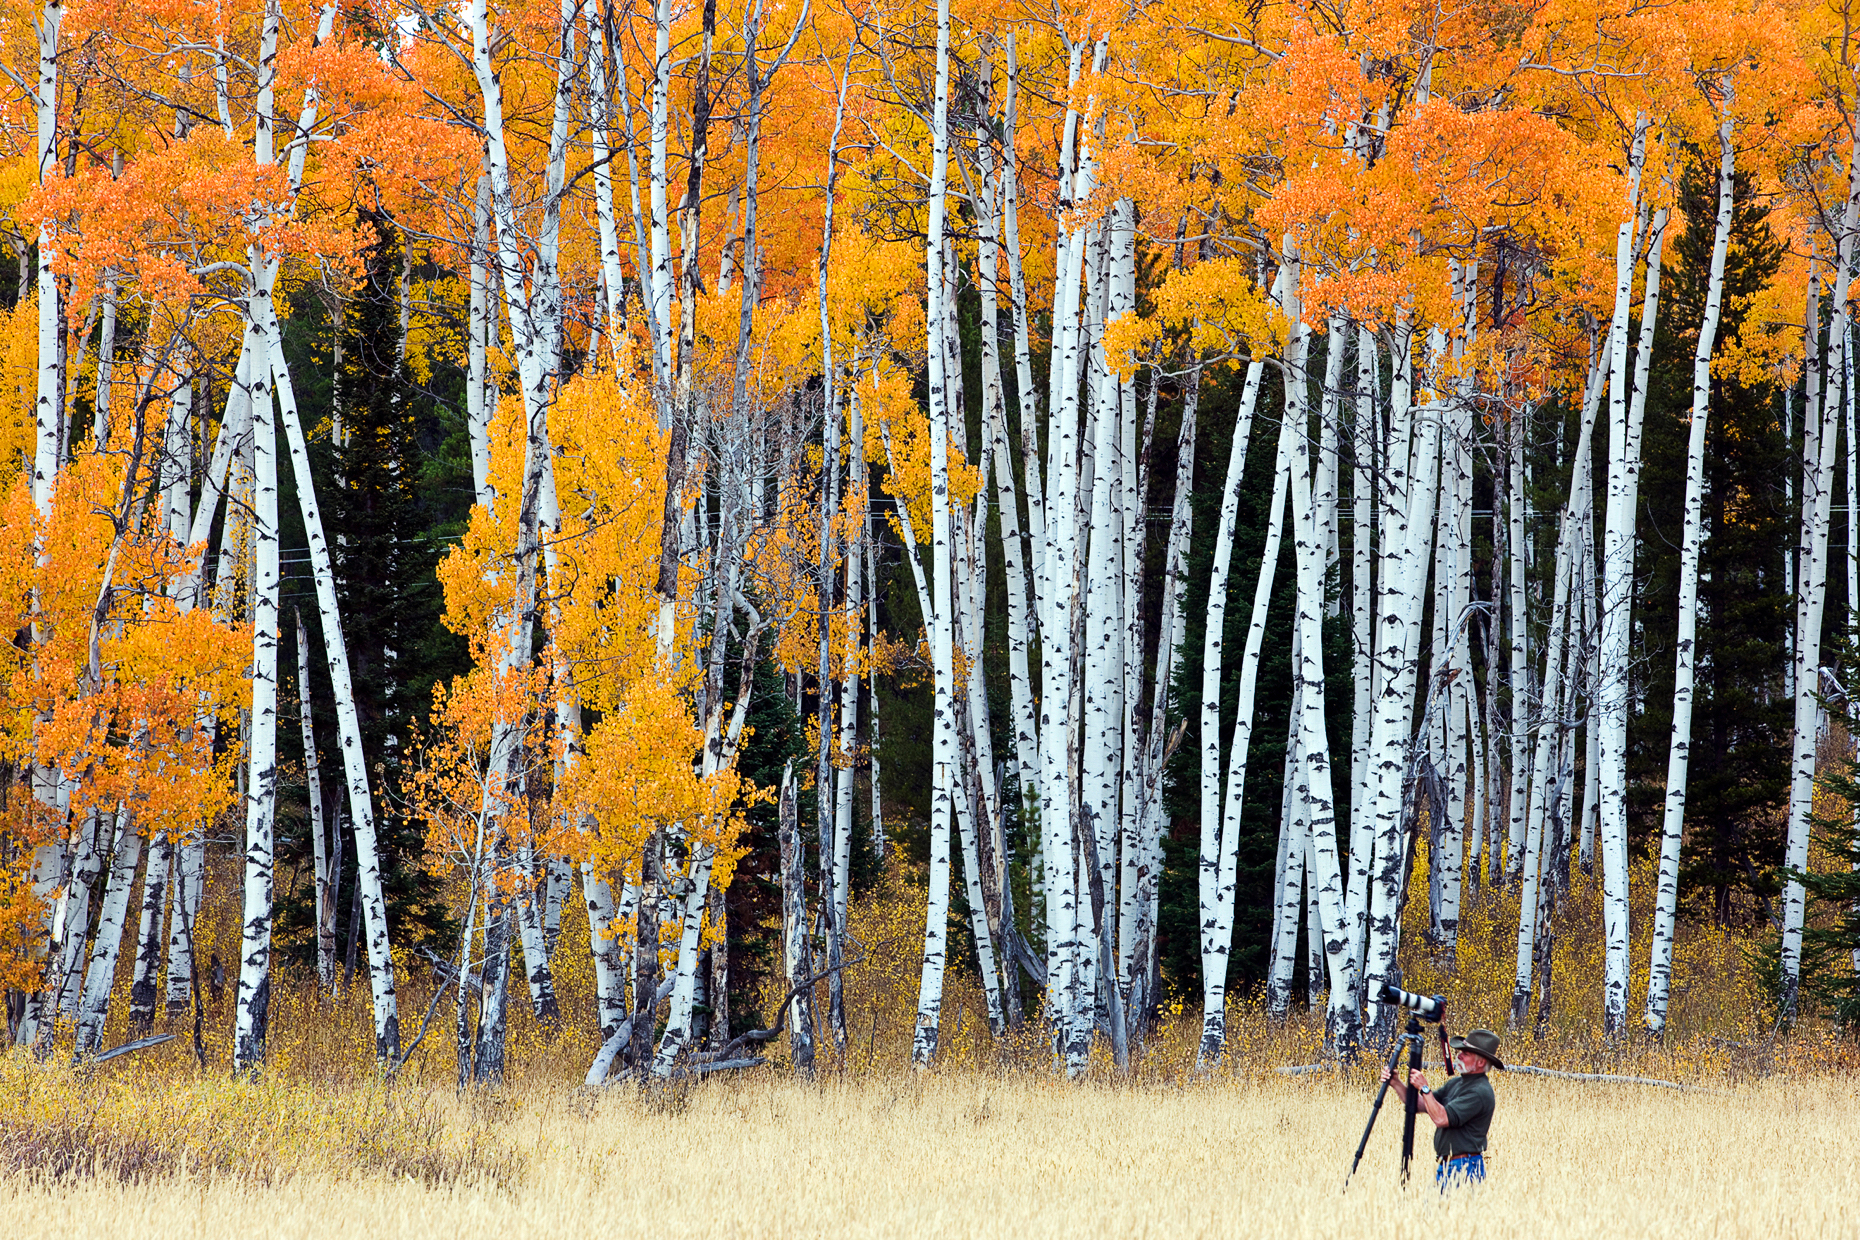 Photographer shooting Aspen trees golden in autumn color, near Rt. 89/287 and Arizona Island, Grand Teton National Park, Wyoming, USA